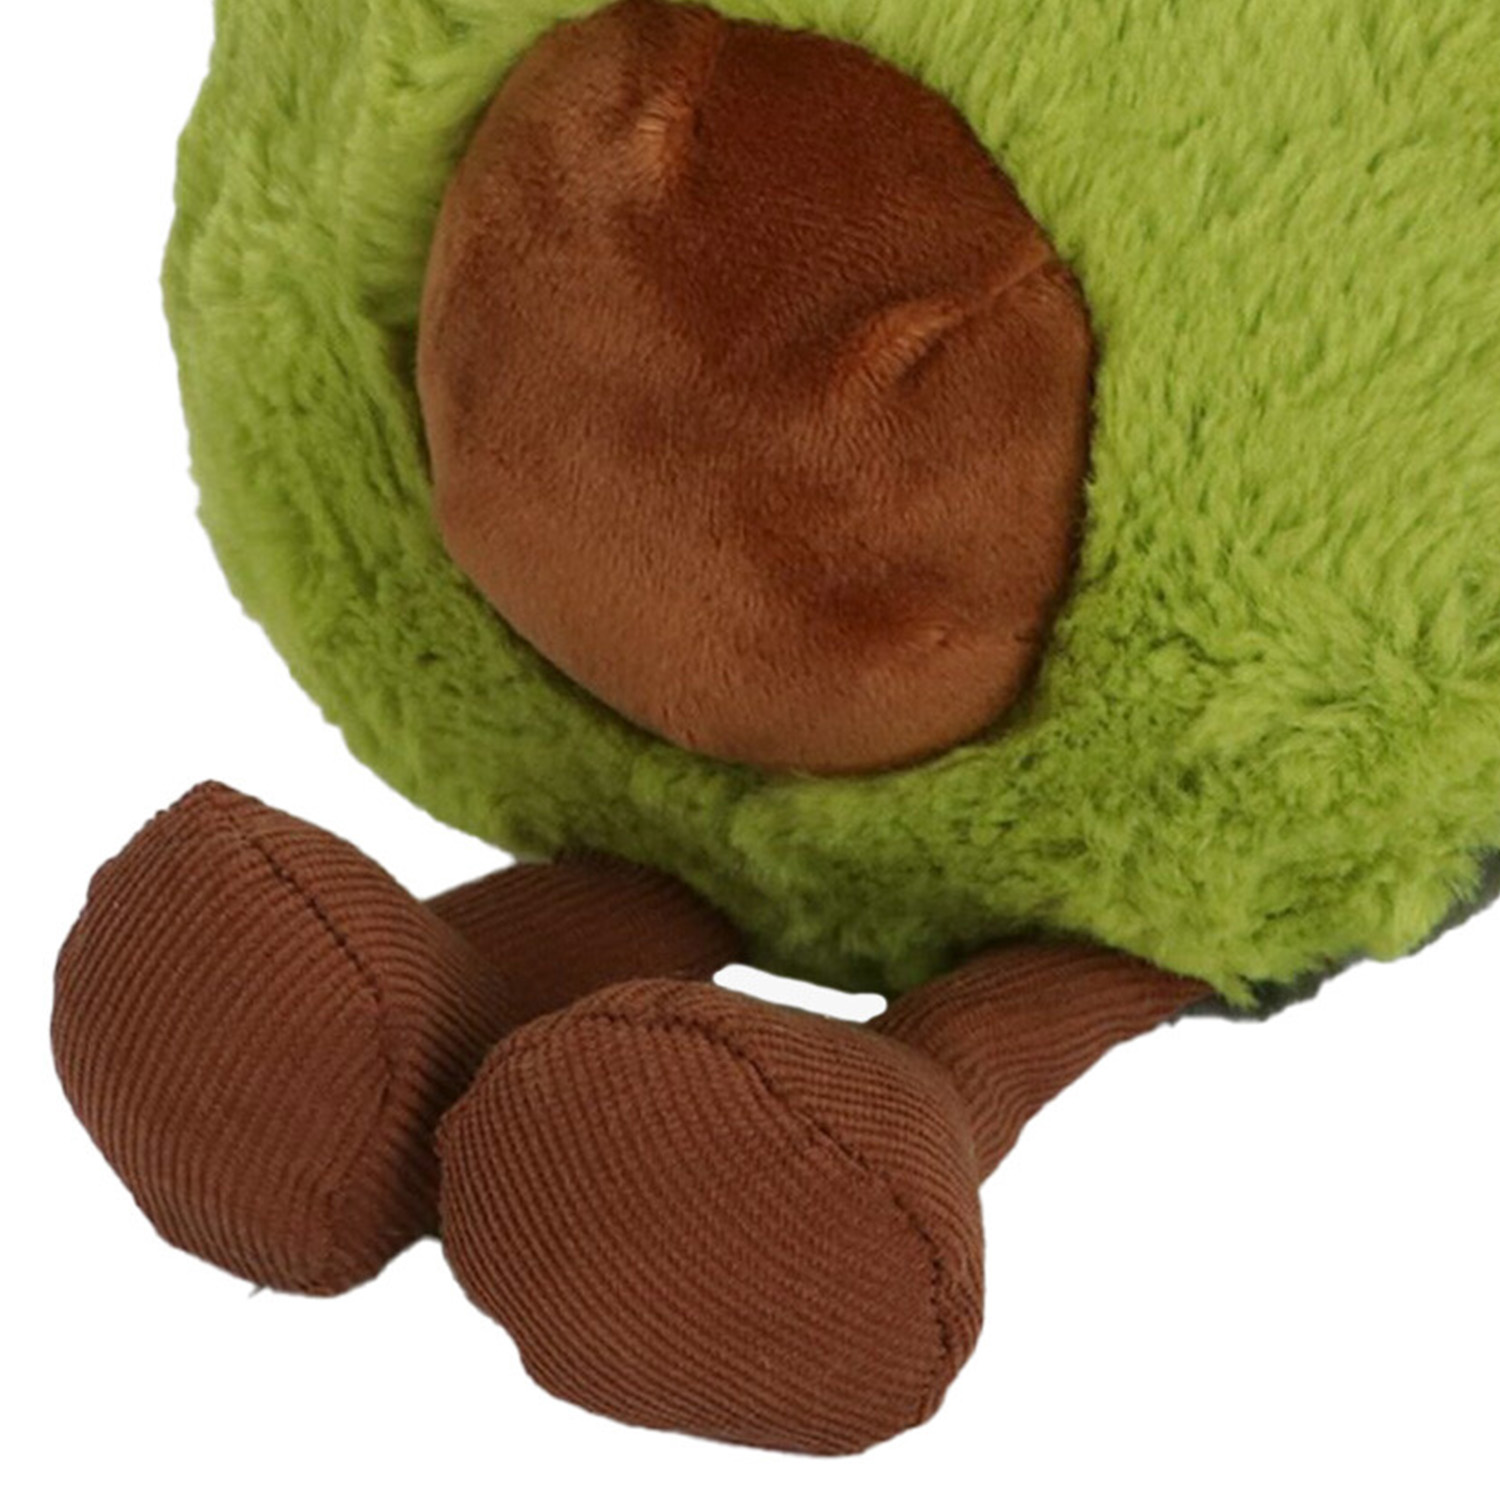 Avocado Plush Toy - Green Image 3